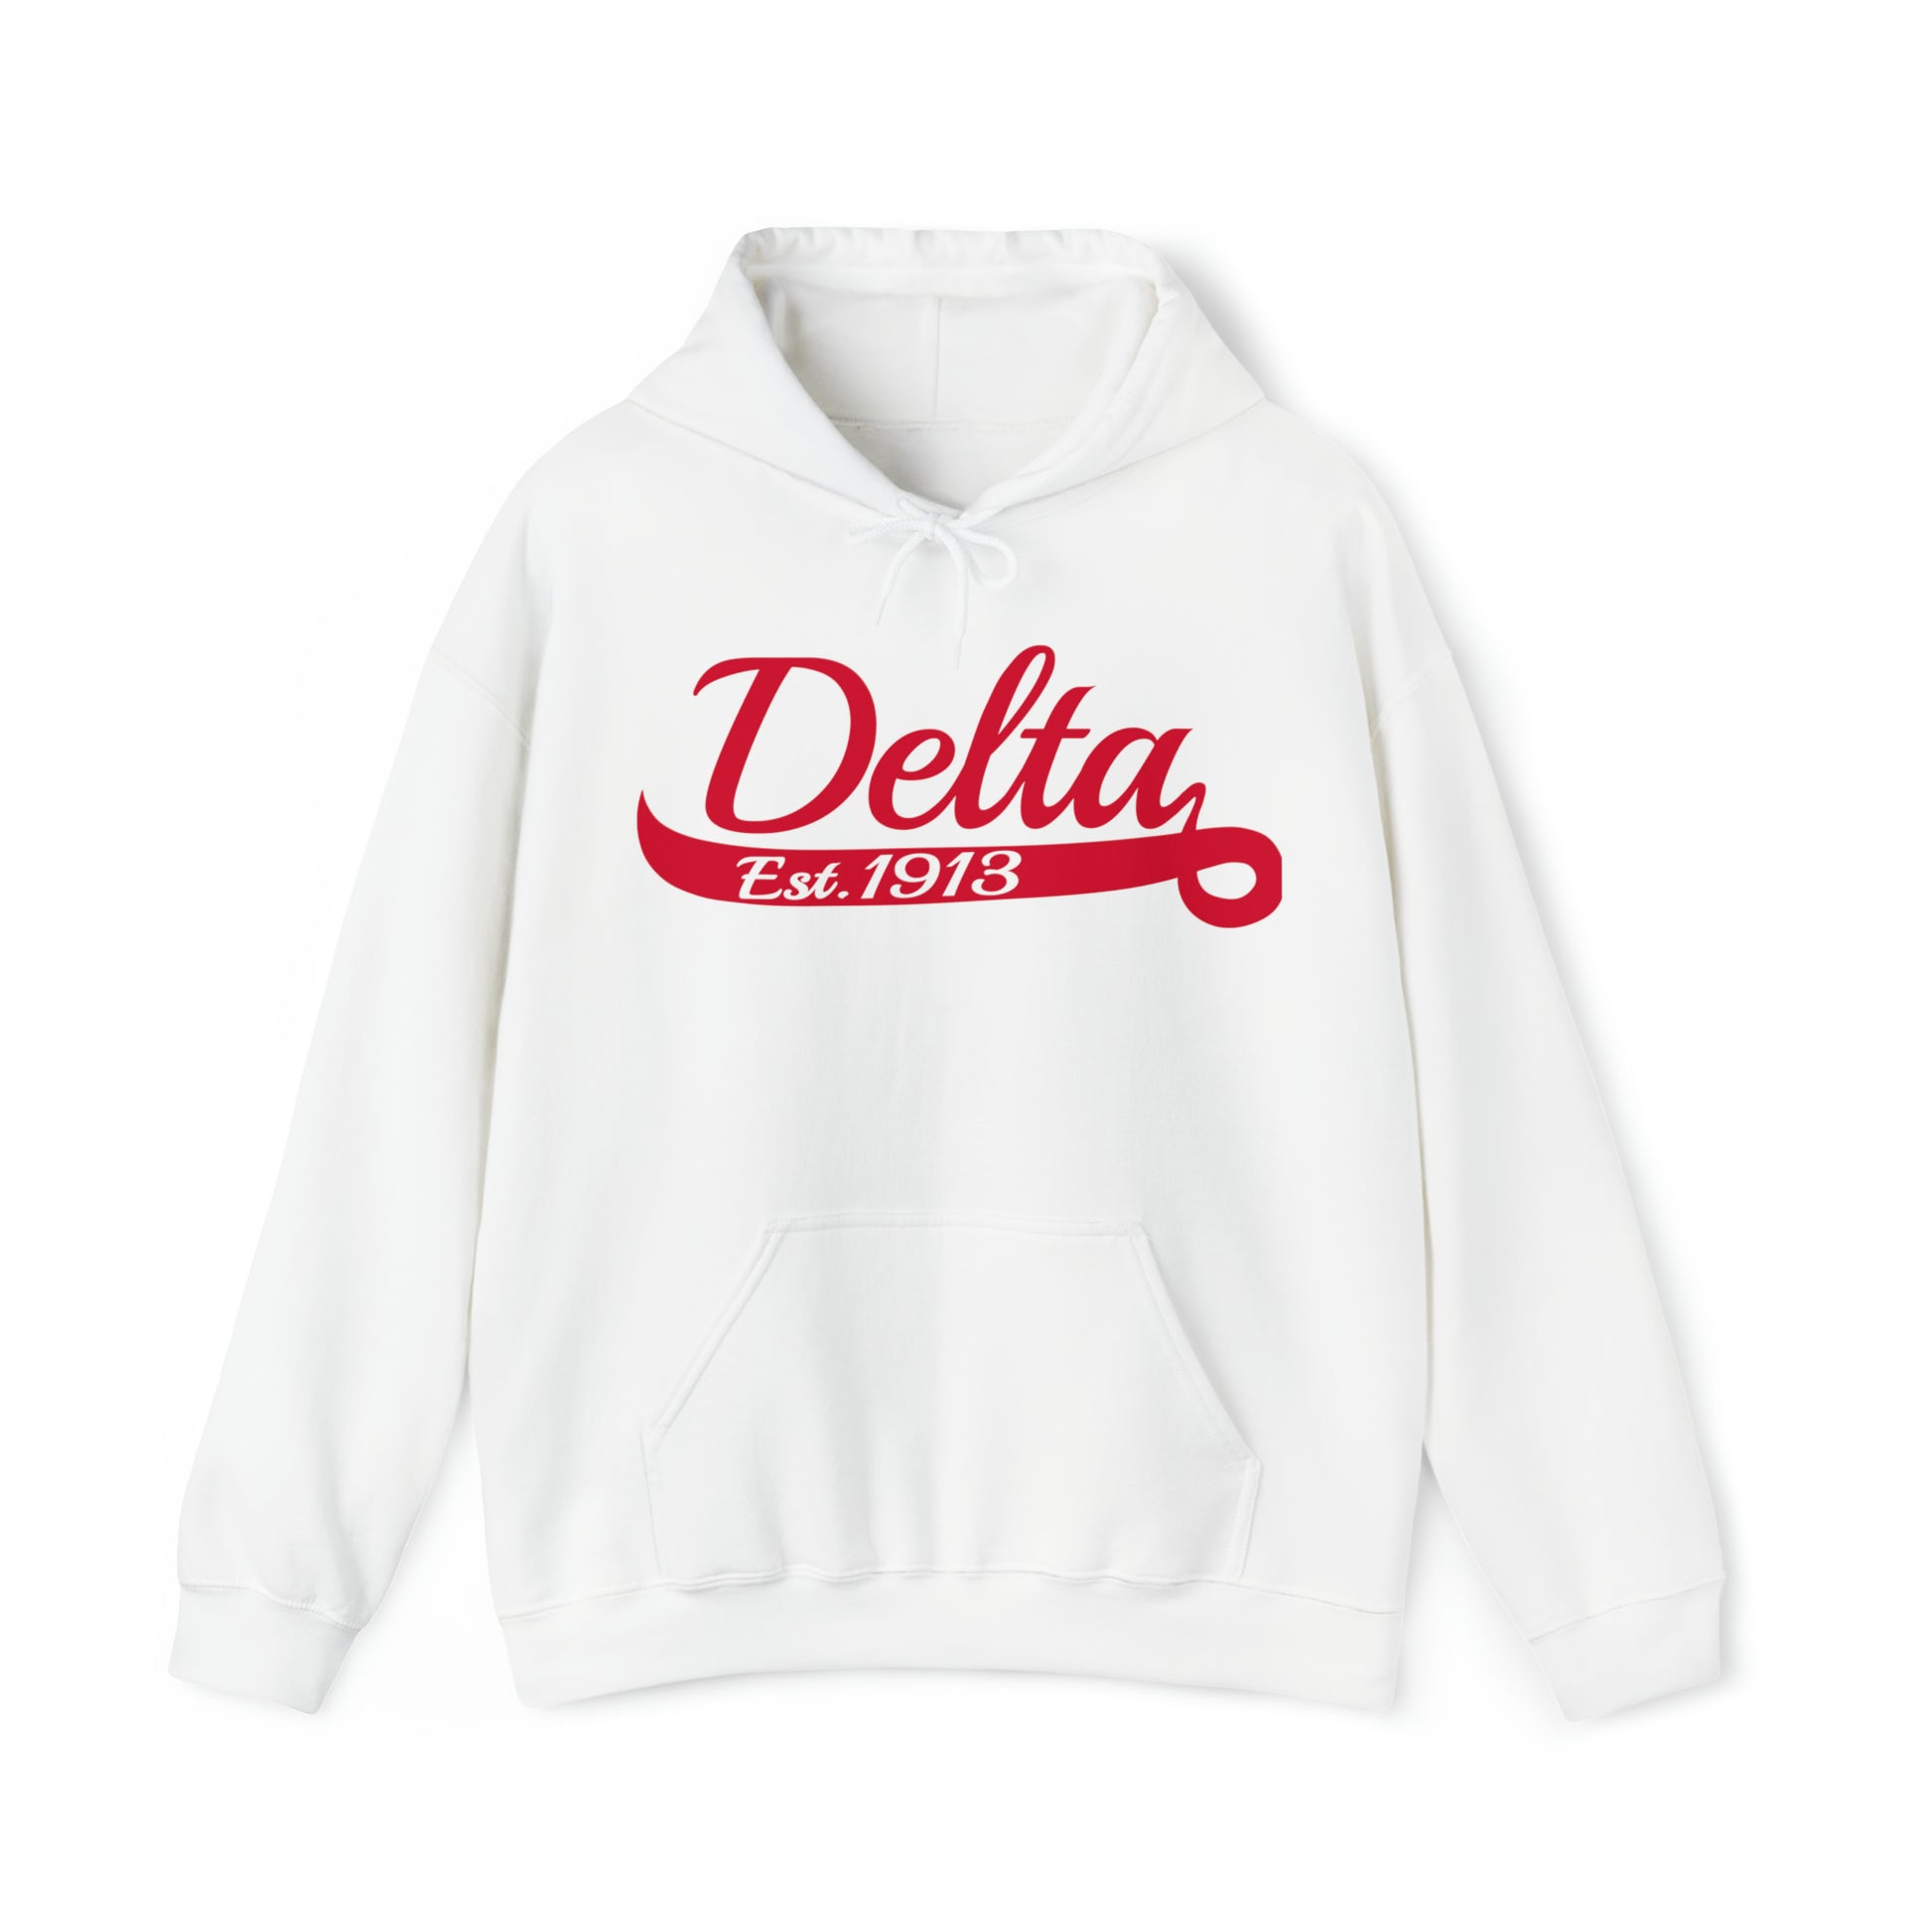 Delta Est.1913 Heavy Blend Hooded Sweatshirt White Delta Sigma Theta